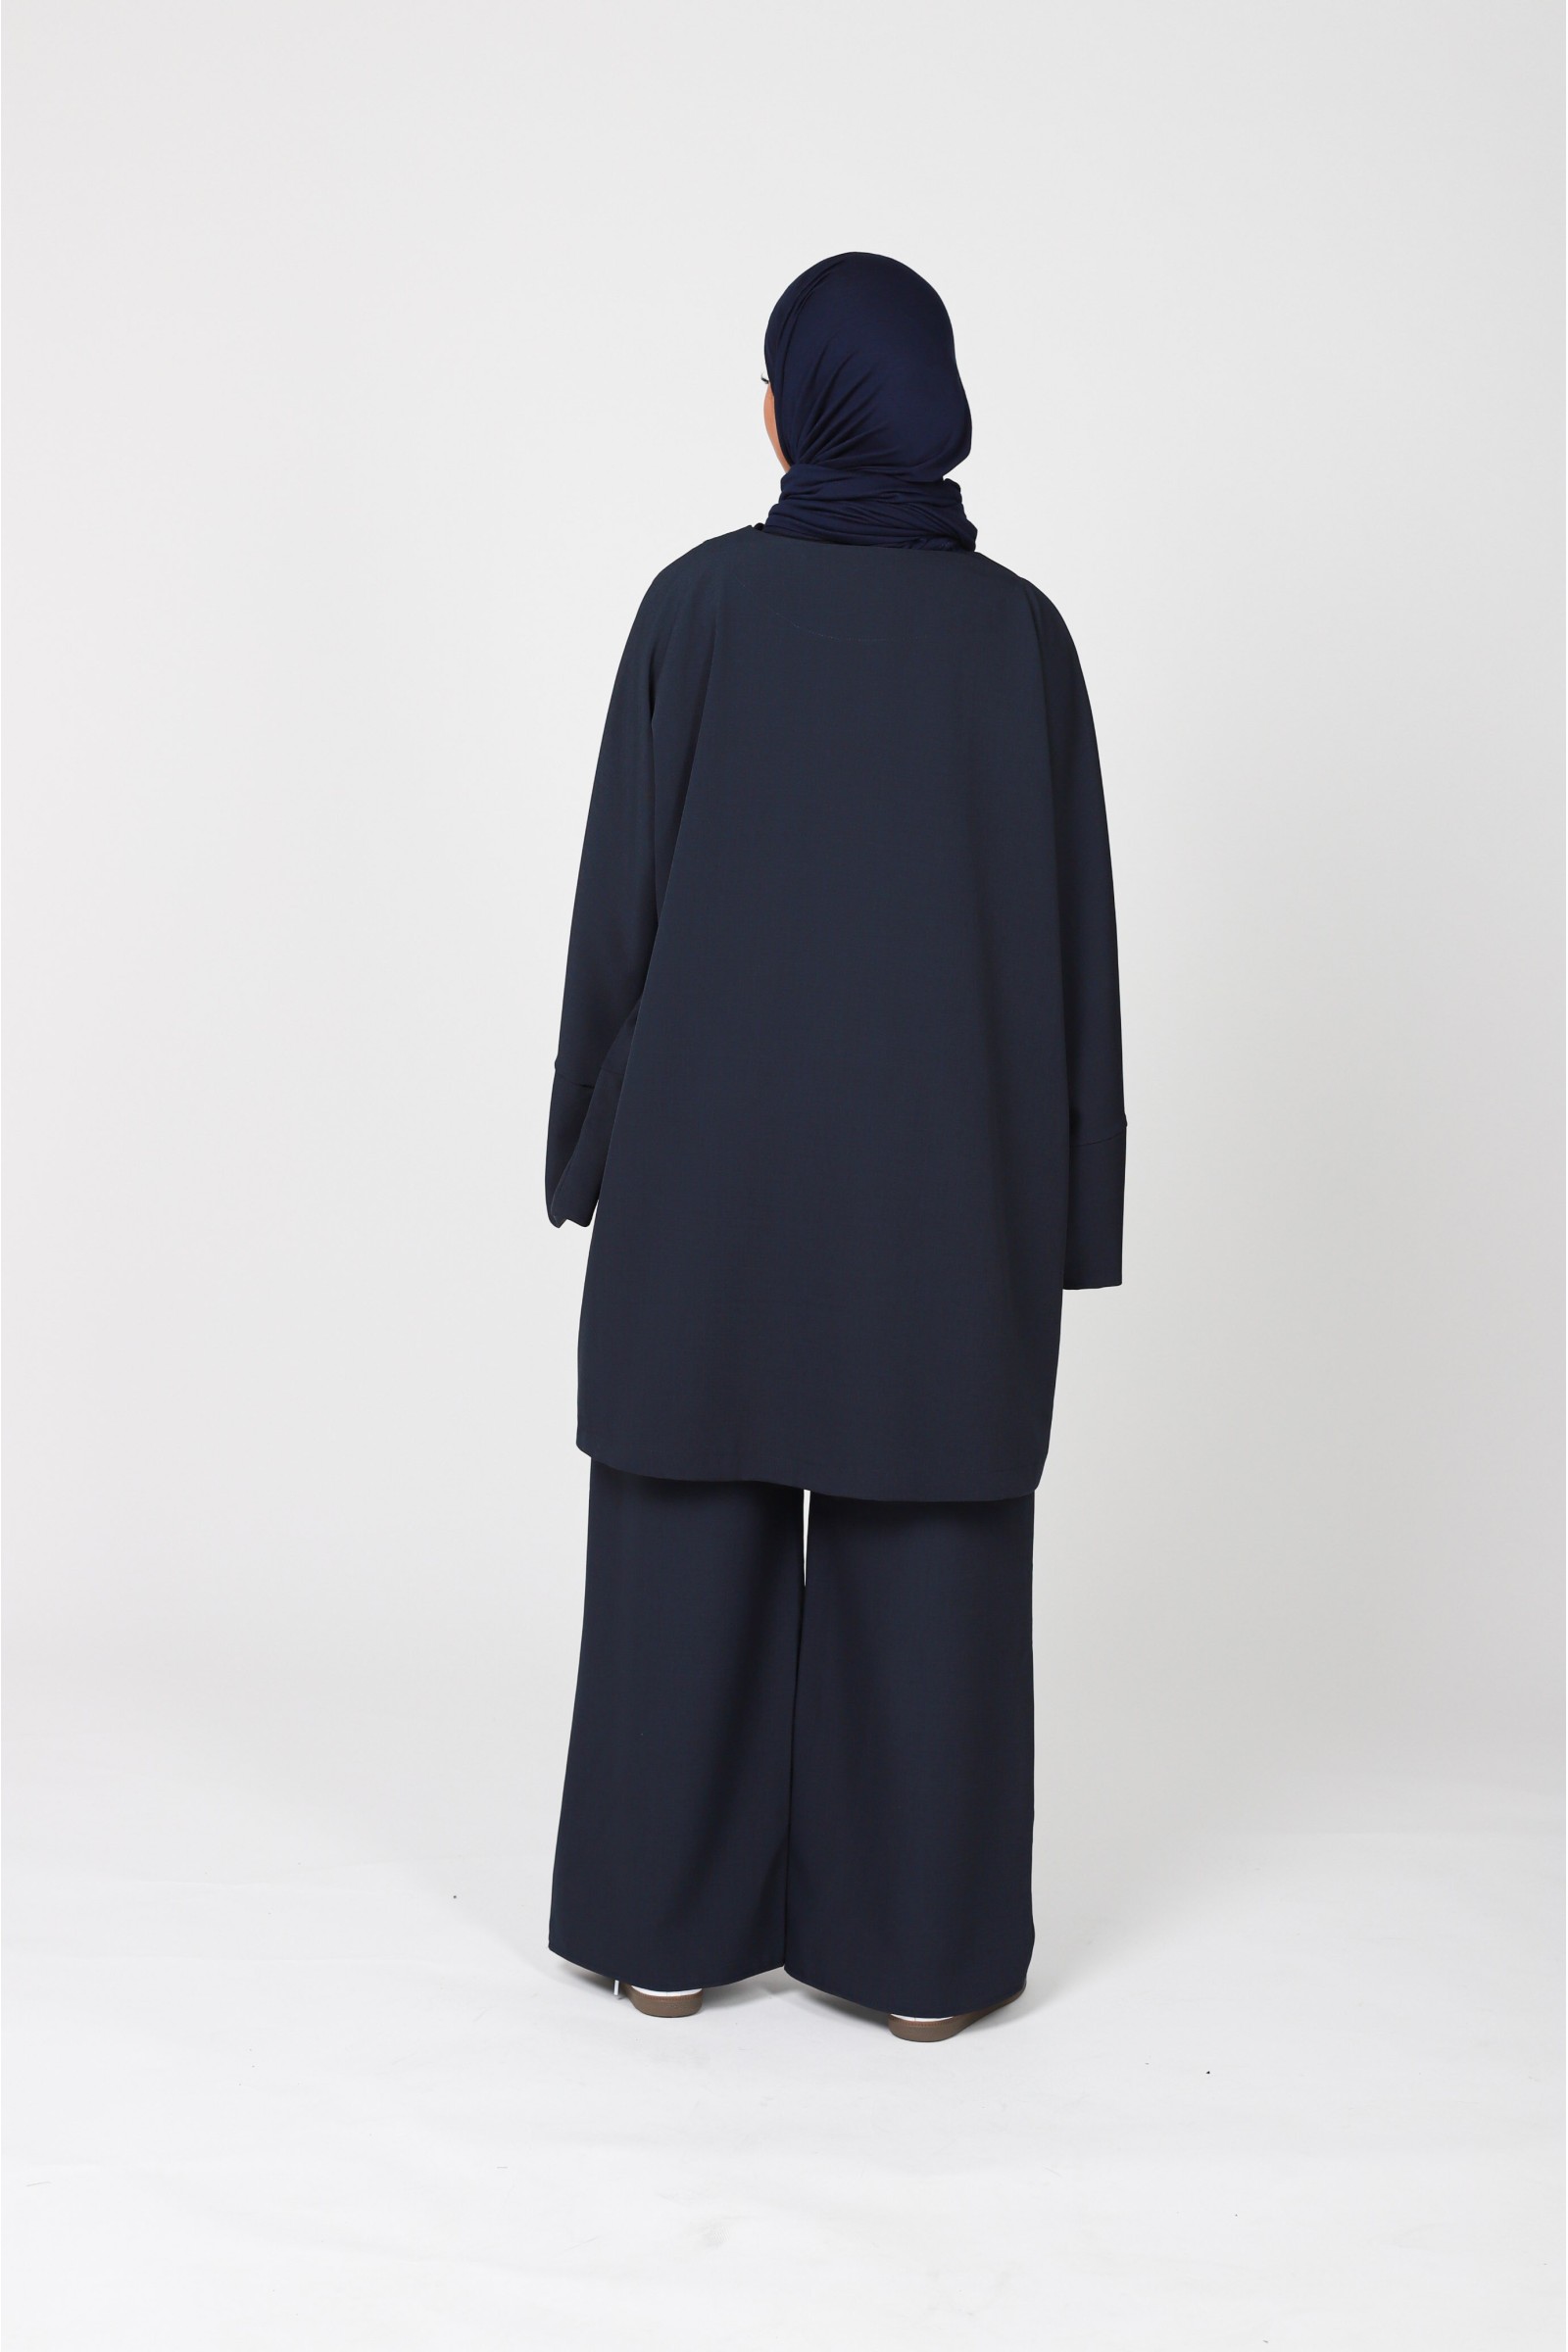 Top and pants set for modest women Mastoura 2024